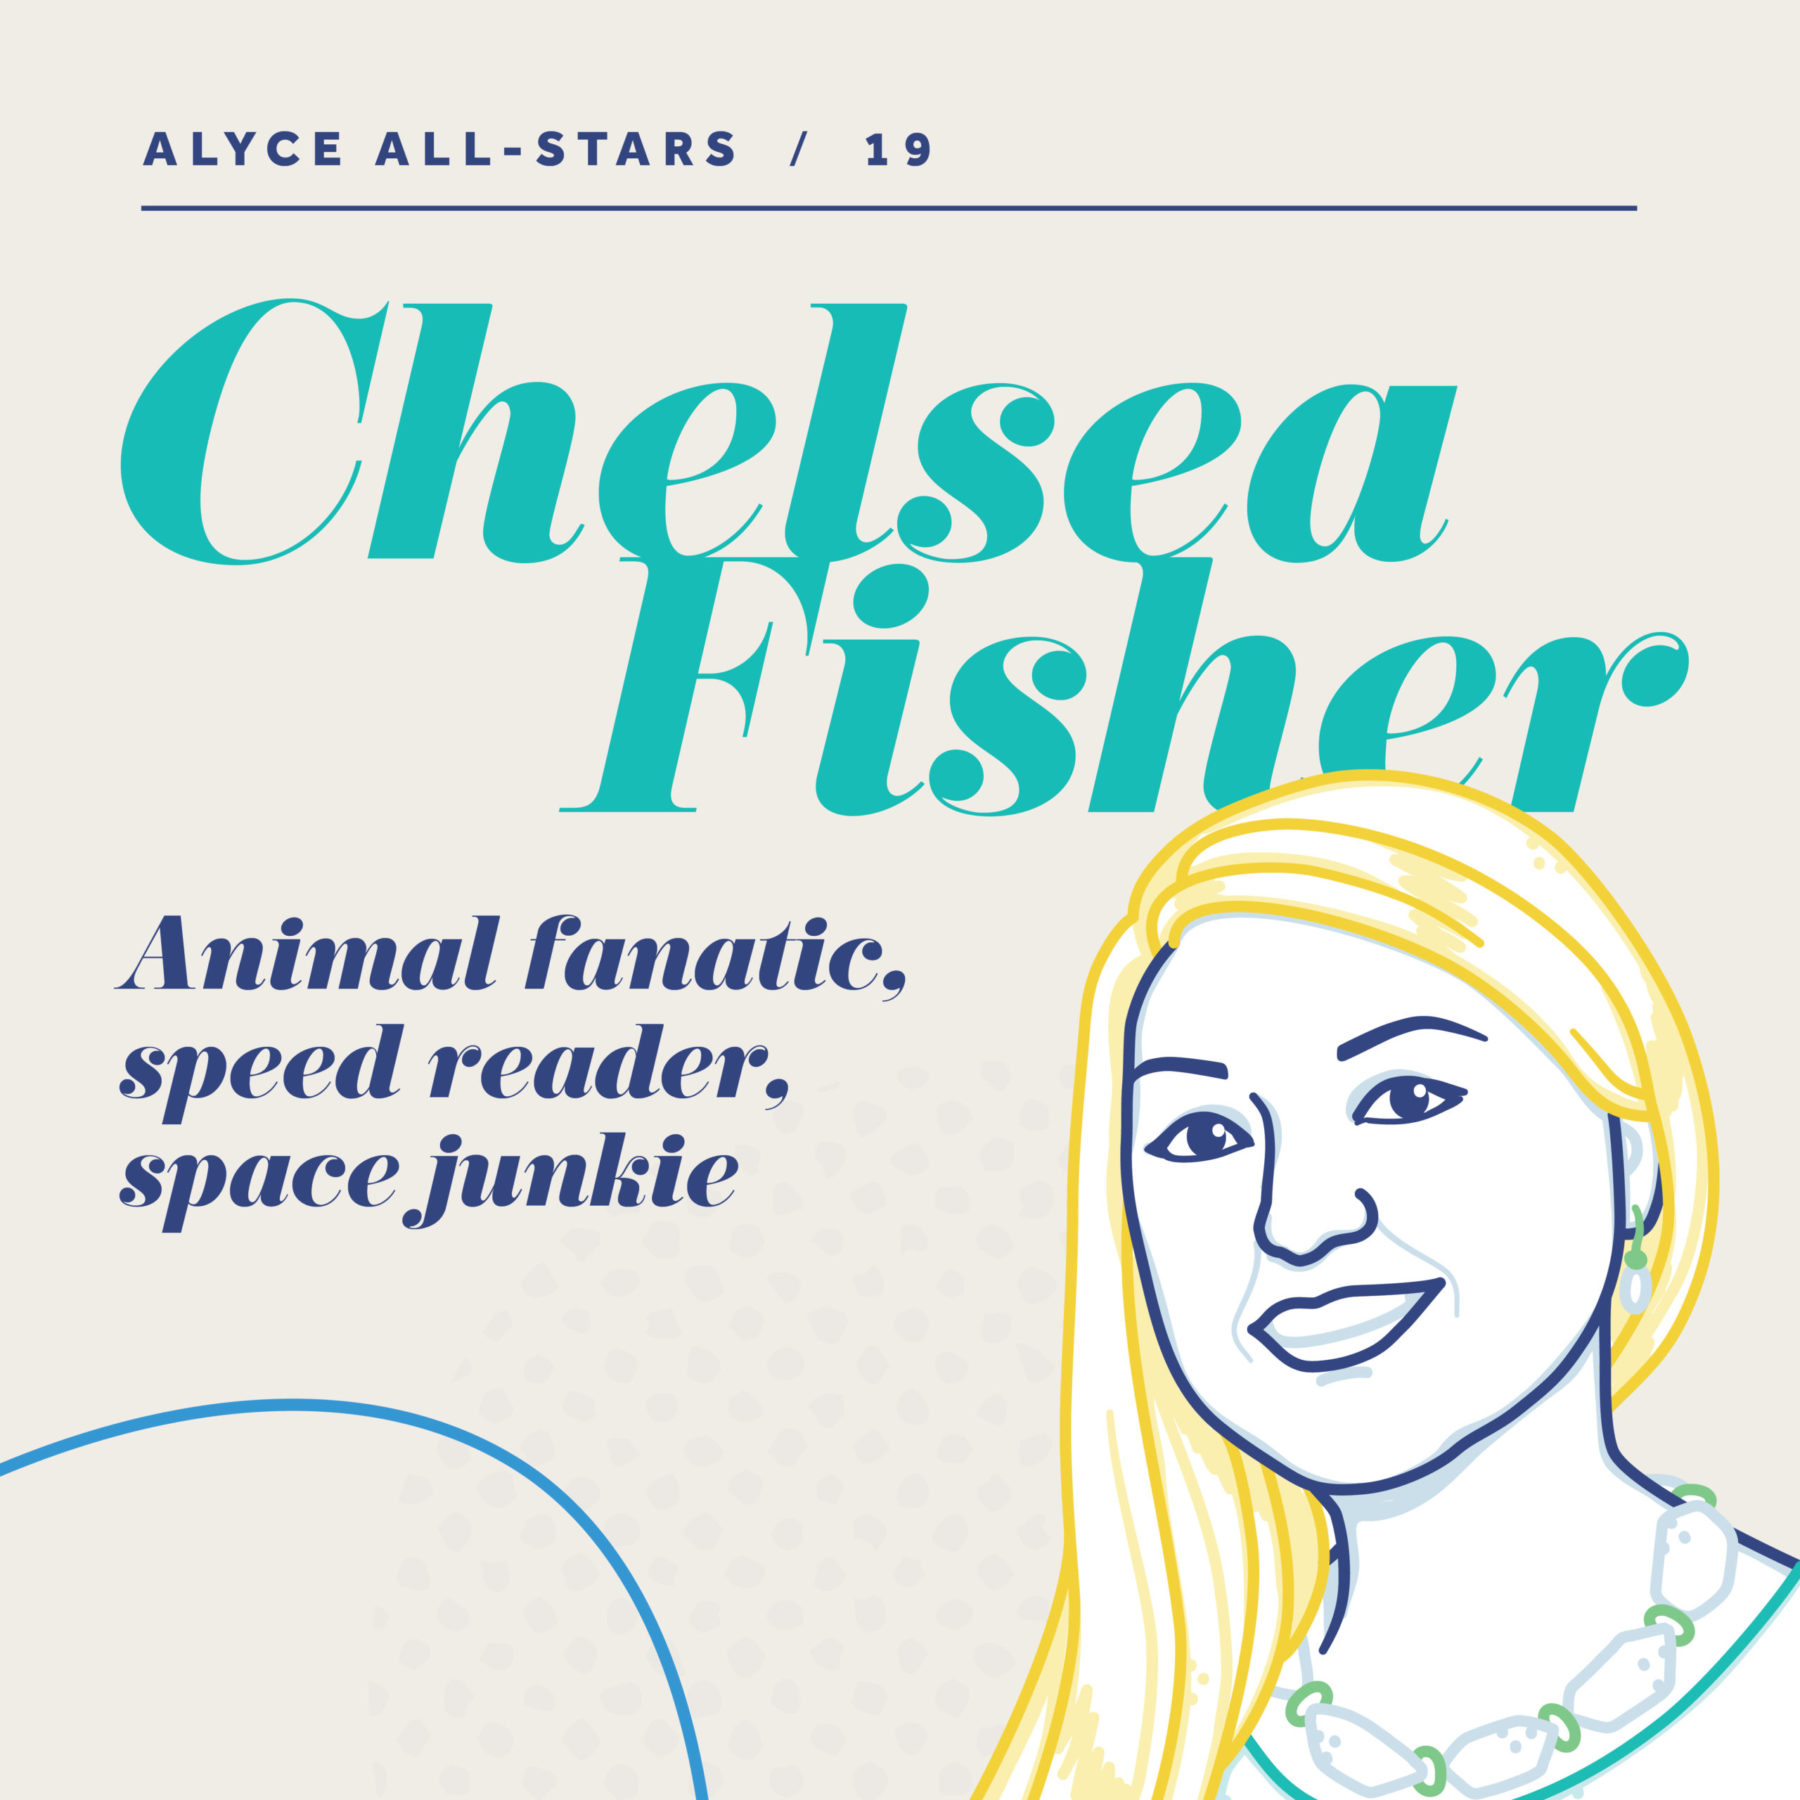 Chelsea Fisher